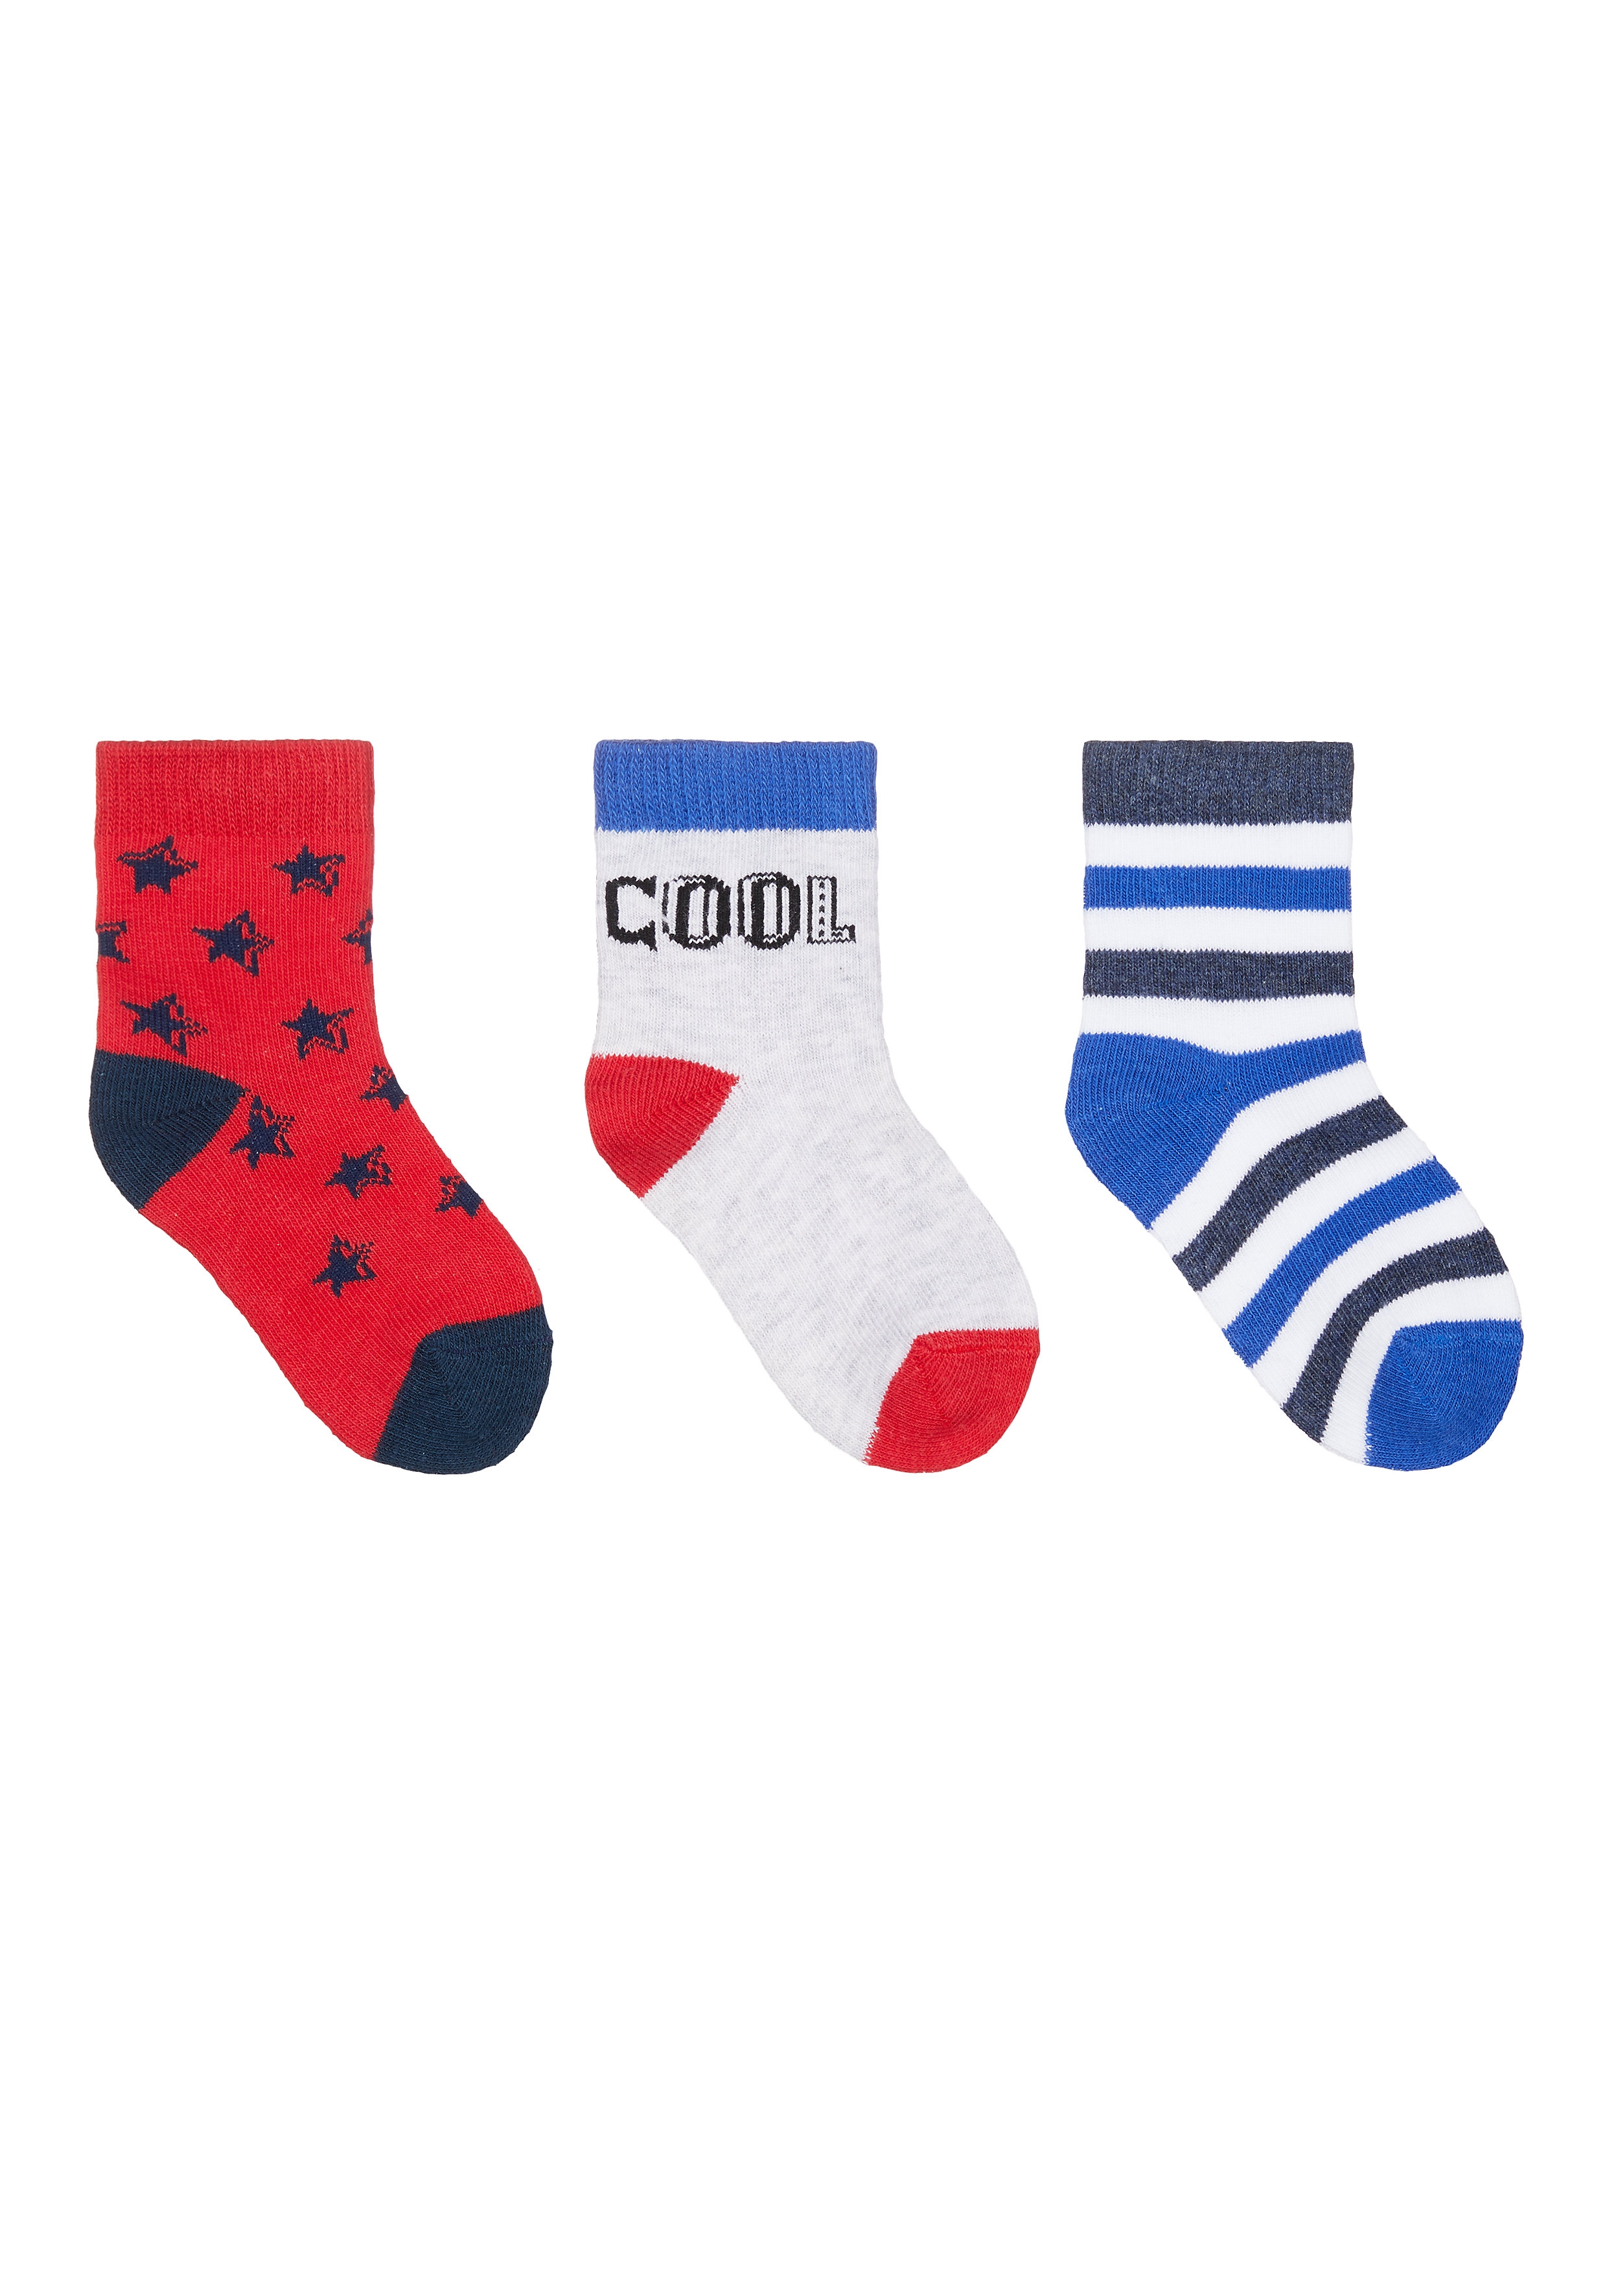 Boys Cool Socks - 3 Pack - Multicolor